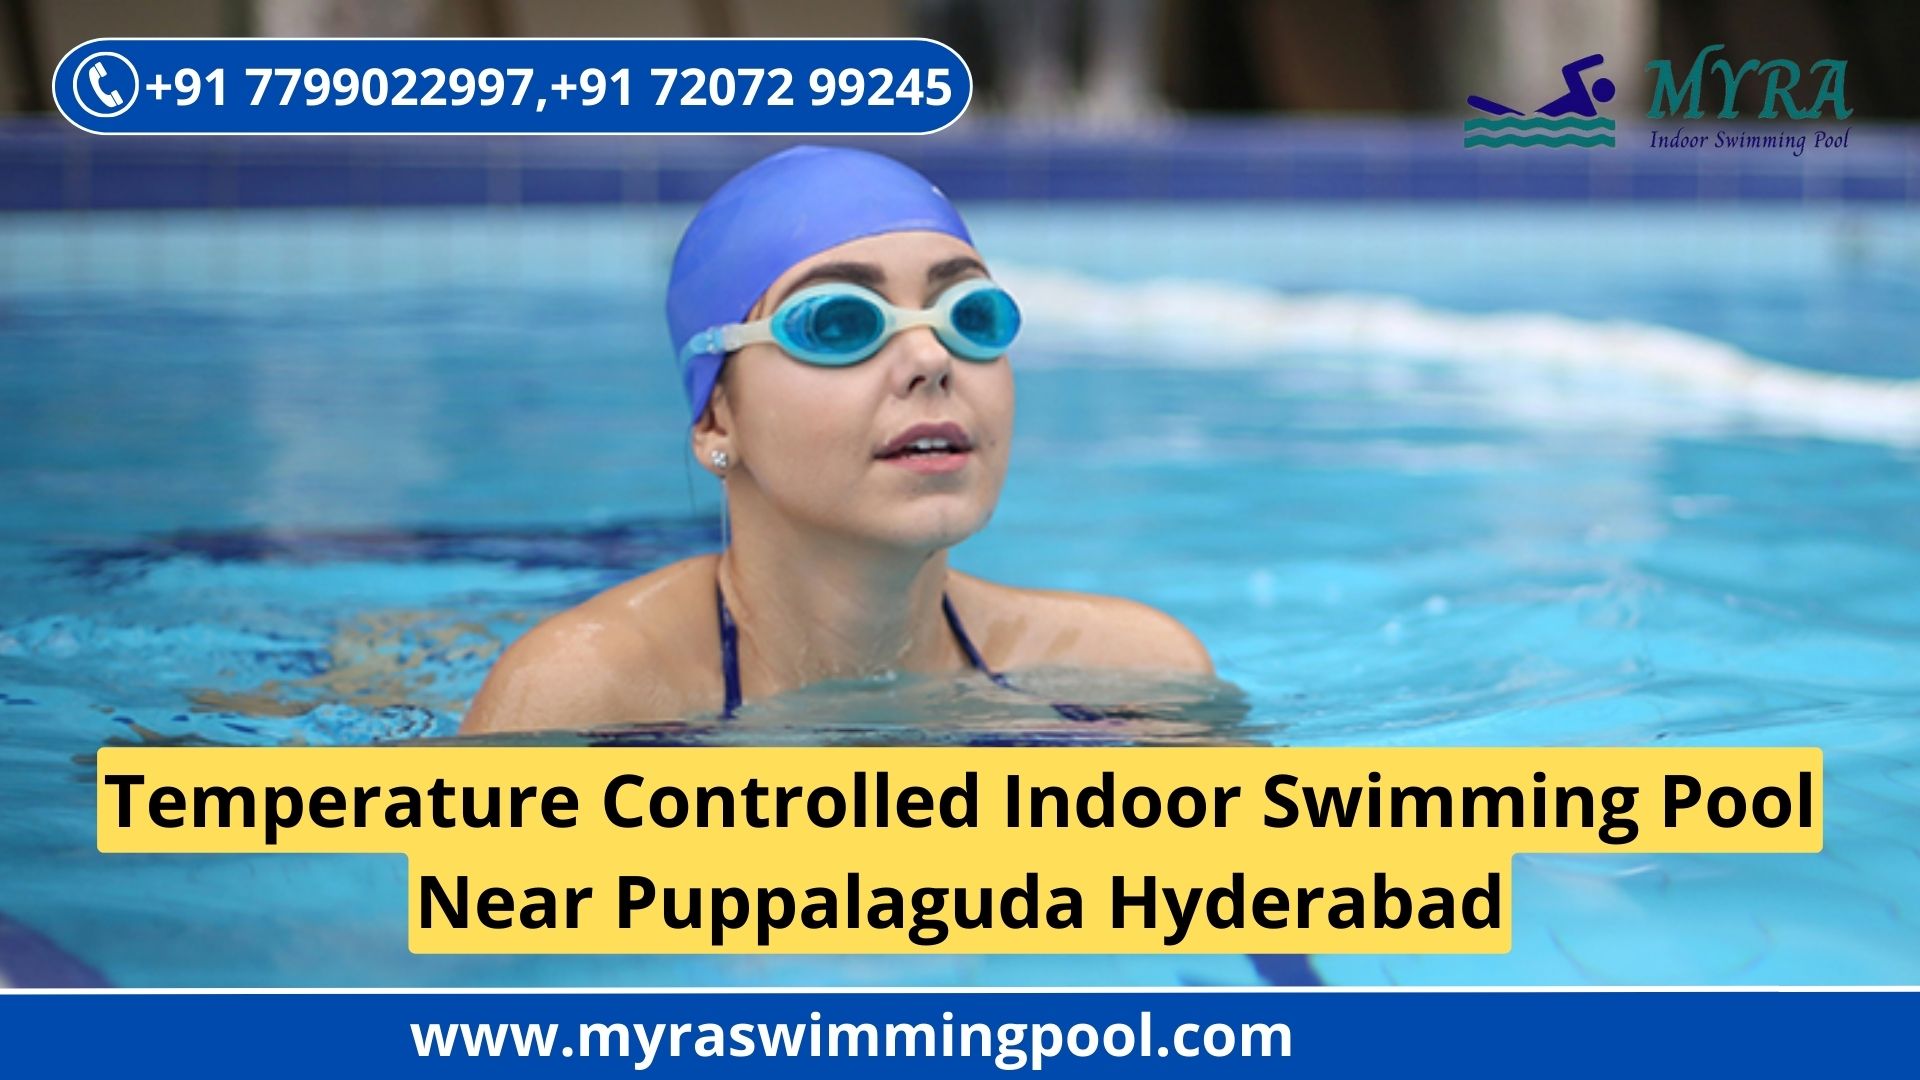 Temperature Controlled Indoor Swimming Pool Near Puppalaguda